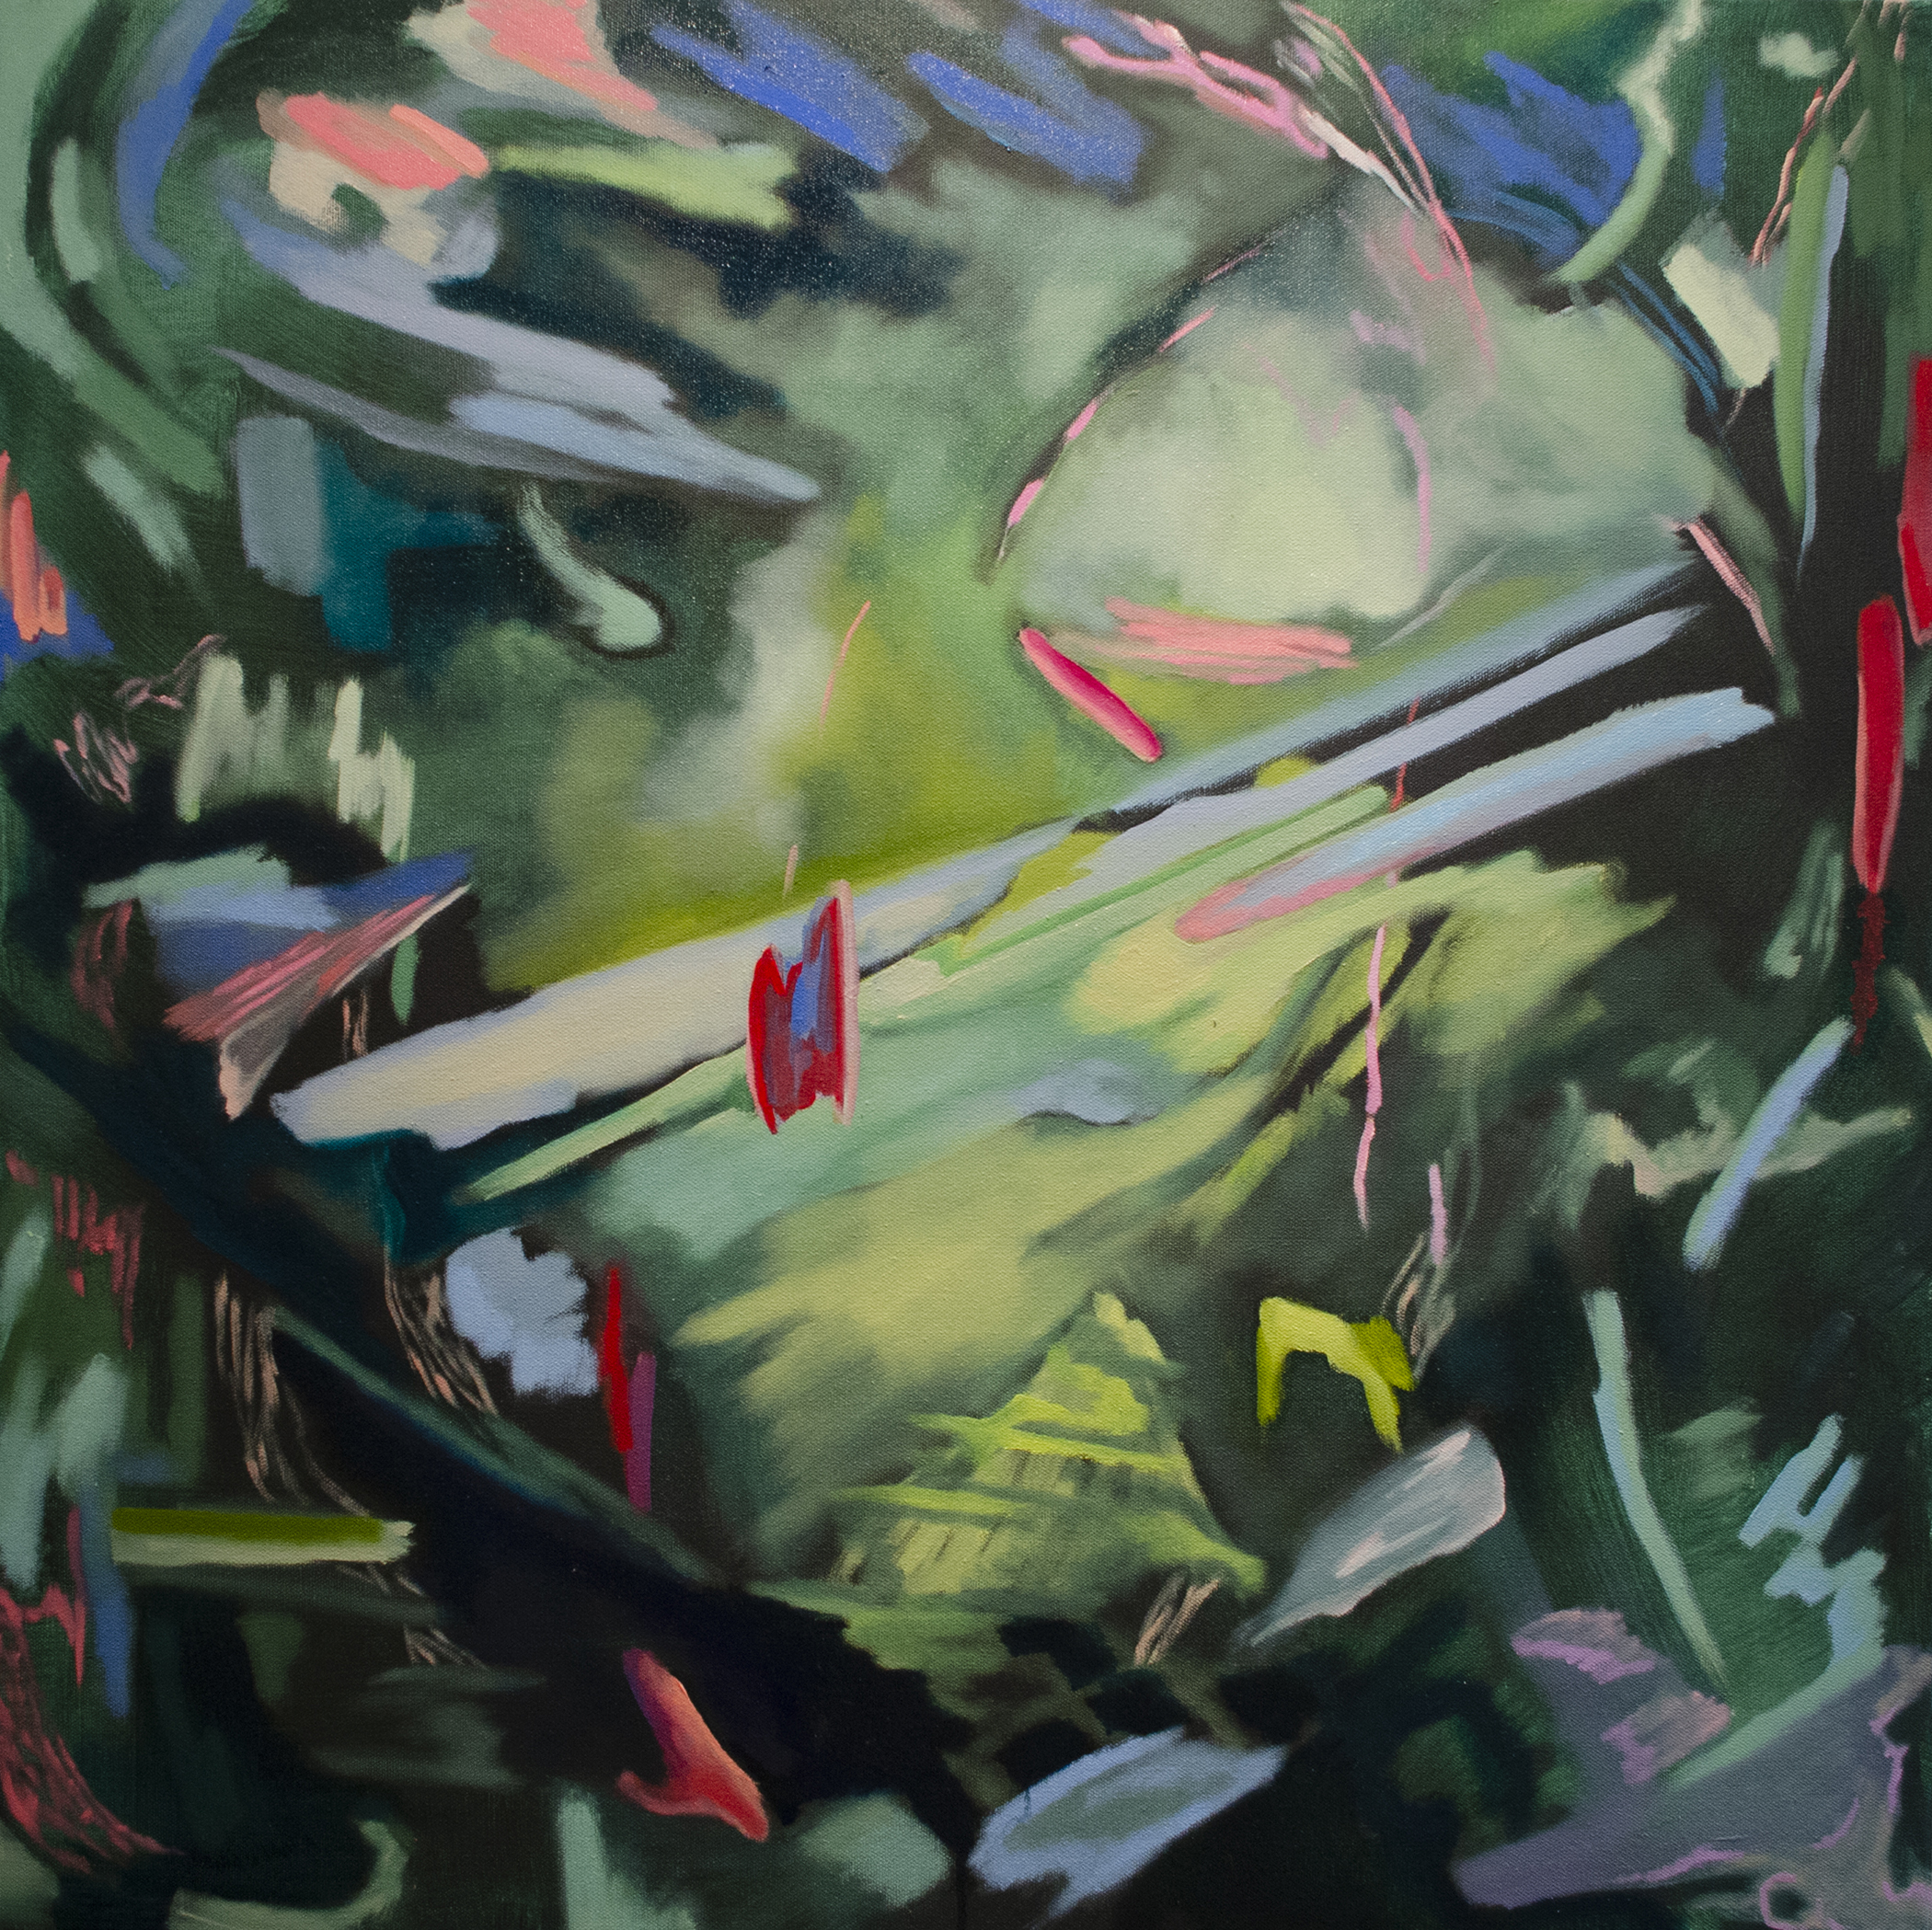 Alyssa Reiser Prince | MFA 2013 | The River | Oil on canvas